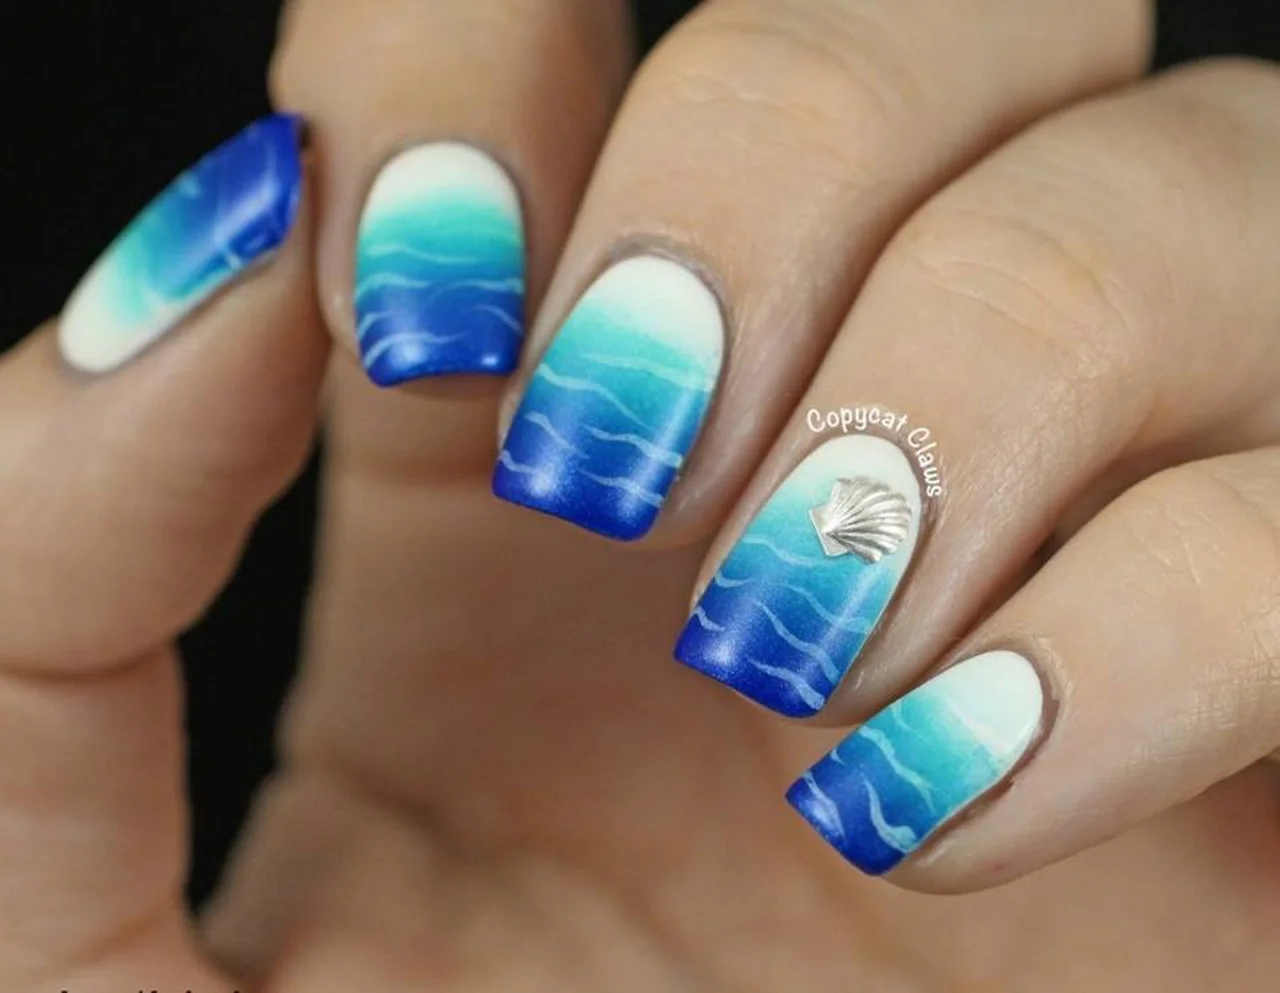 Morskie manicure